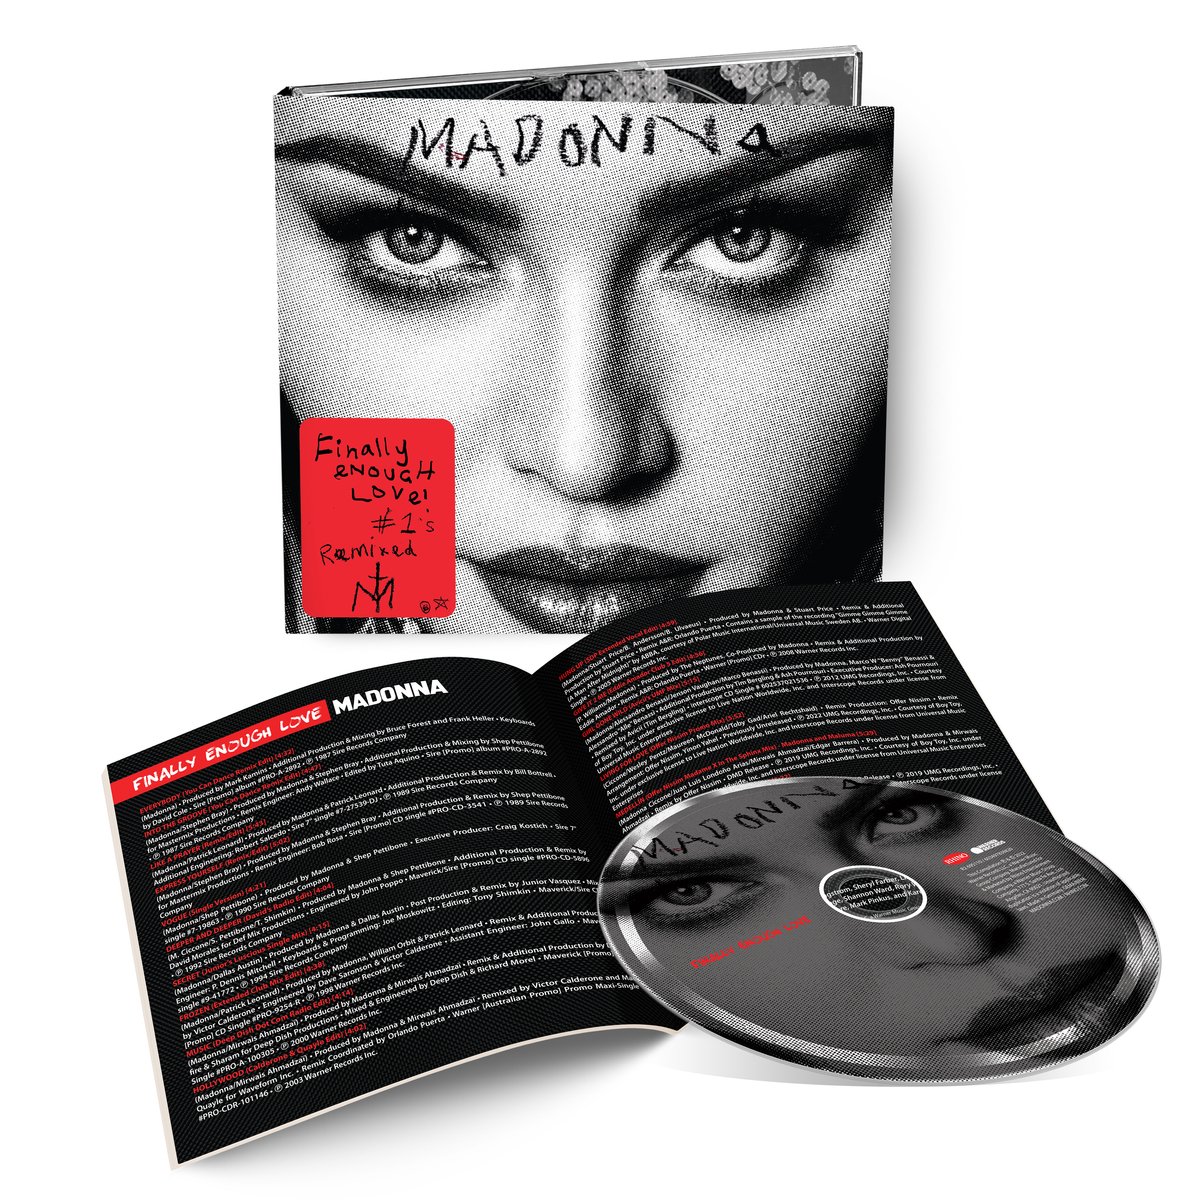 Finally Enough Love (CD) - Madonna